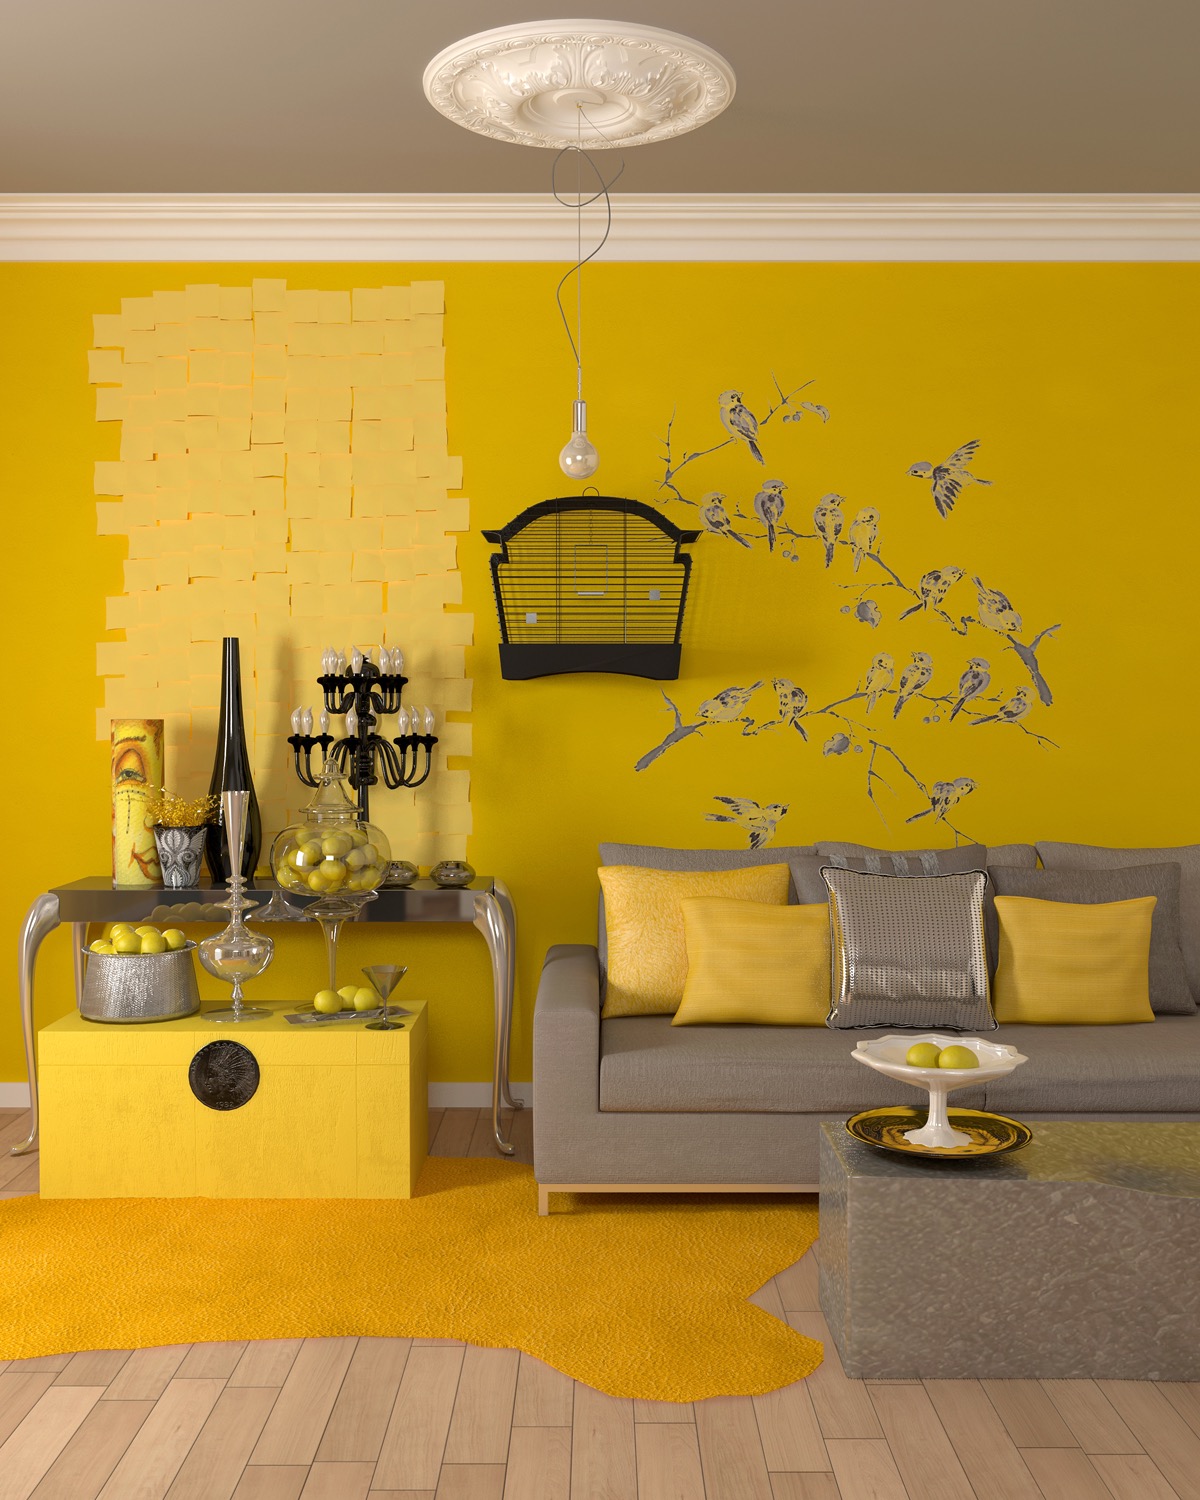 simple living room design "width =" 1200 "height =" 1500 "srcset =" https://mileray.com/wp-content/uploads/2020/05/1588517743_220_Gorgeous-Living-Room-Design-With-Yellow-Accents.jpg 1200w, https://mileray.com / wp -content / uploads / 2016/07 / Aspa-Gutmeni-240x300.jpg 240w, https://mileray.com/wp-content/uploads/2016/07/Aspa-Gutmeni-768x960.jpg 768w, https: / / myfashionos .com / wp-content / uploads / 2016/07 / Aspa-Gutmeni-819x1024.jpg 819w, https://mileray.com/wp-content/uploads/2016/07/Aspa-Gutmeni-696x870.jpg 696w, https : //mileray.com/wp-content/uploads/2016/07/Aspa-Gutmeni-1068x1335.jpg 1068w, https://mileray.com/wp-content/uploads/2016/07/Aspa-Gutmeni- 336x420. jpg 336w "sizes =" (maximum width: 1200px) 100vw, 1200px